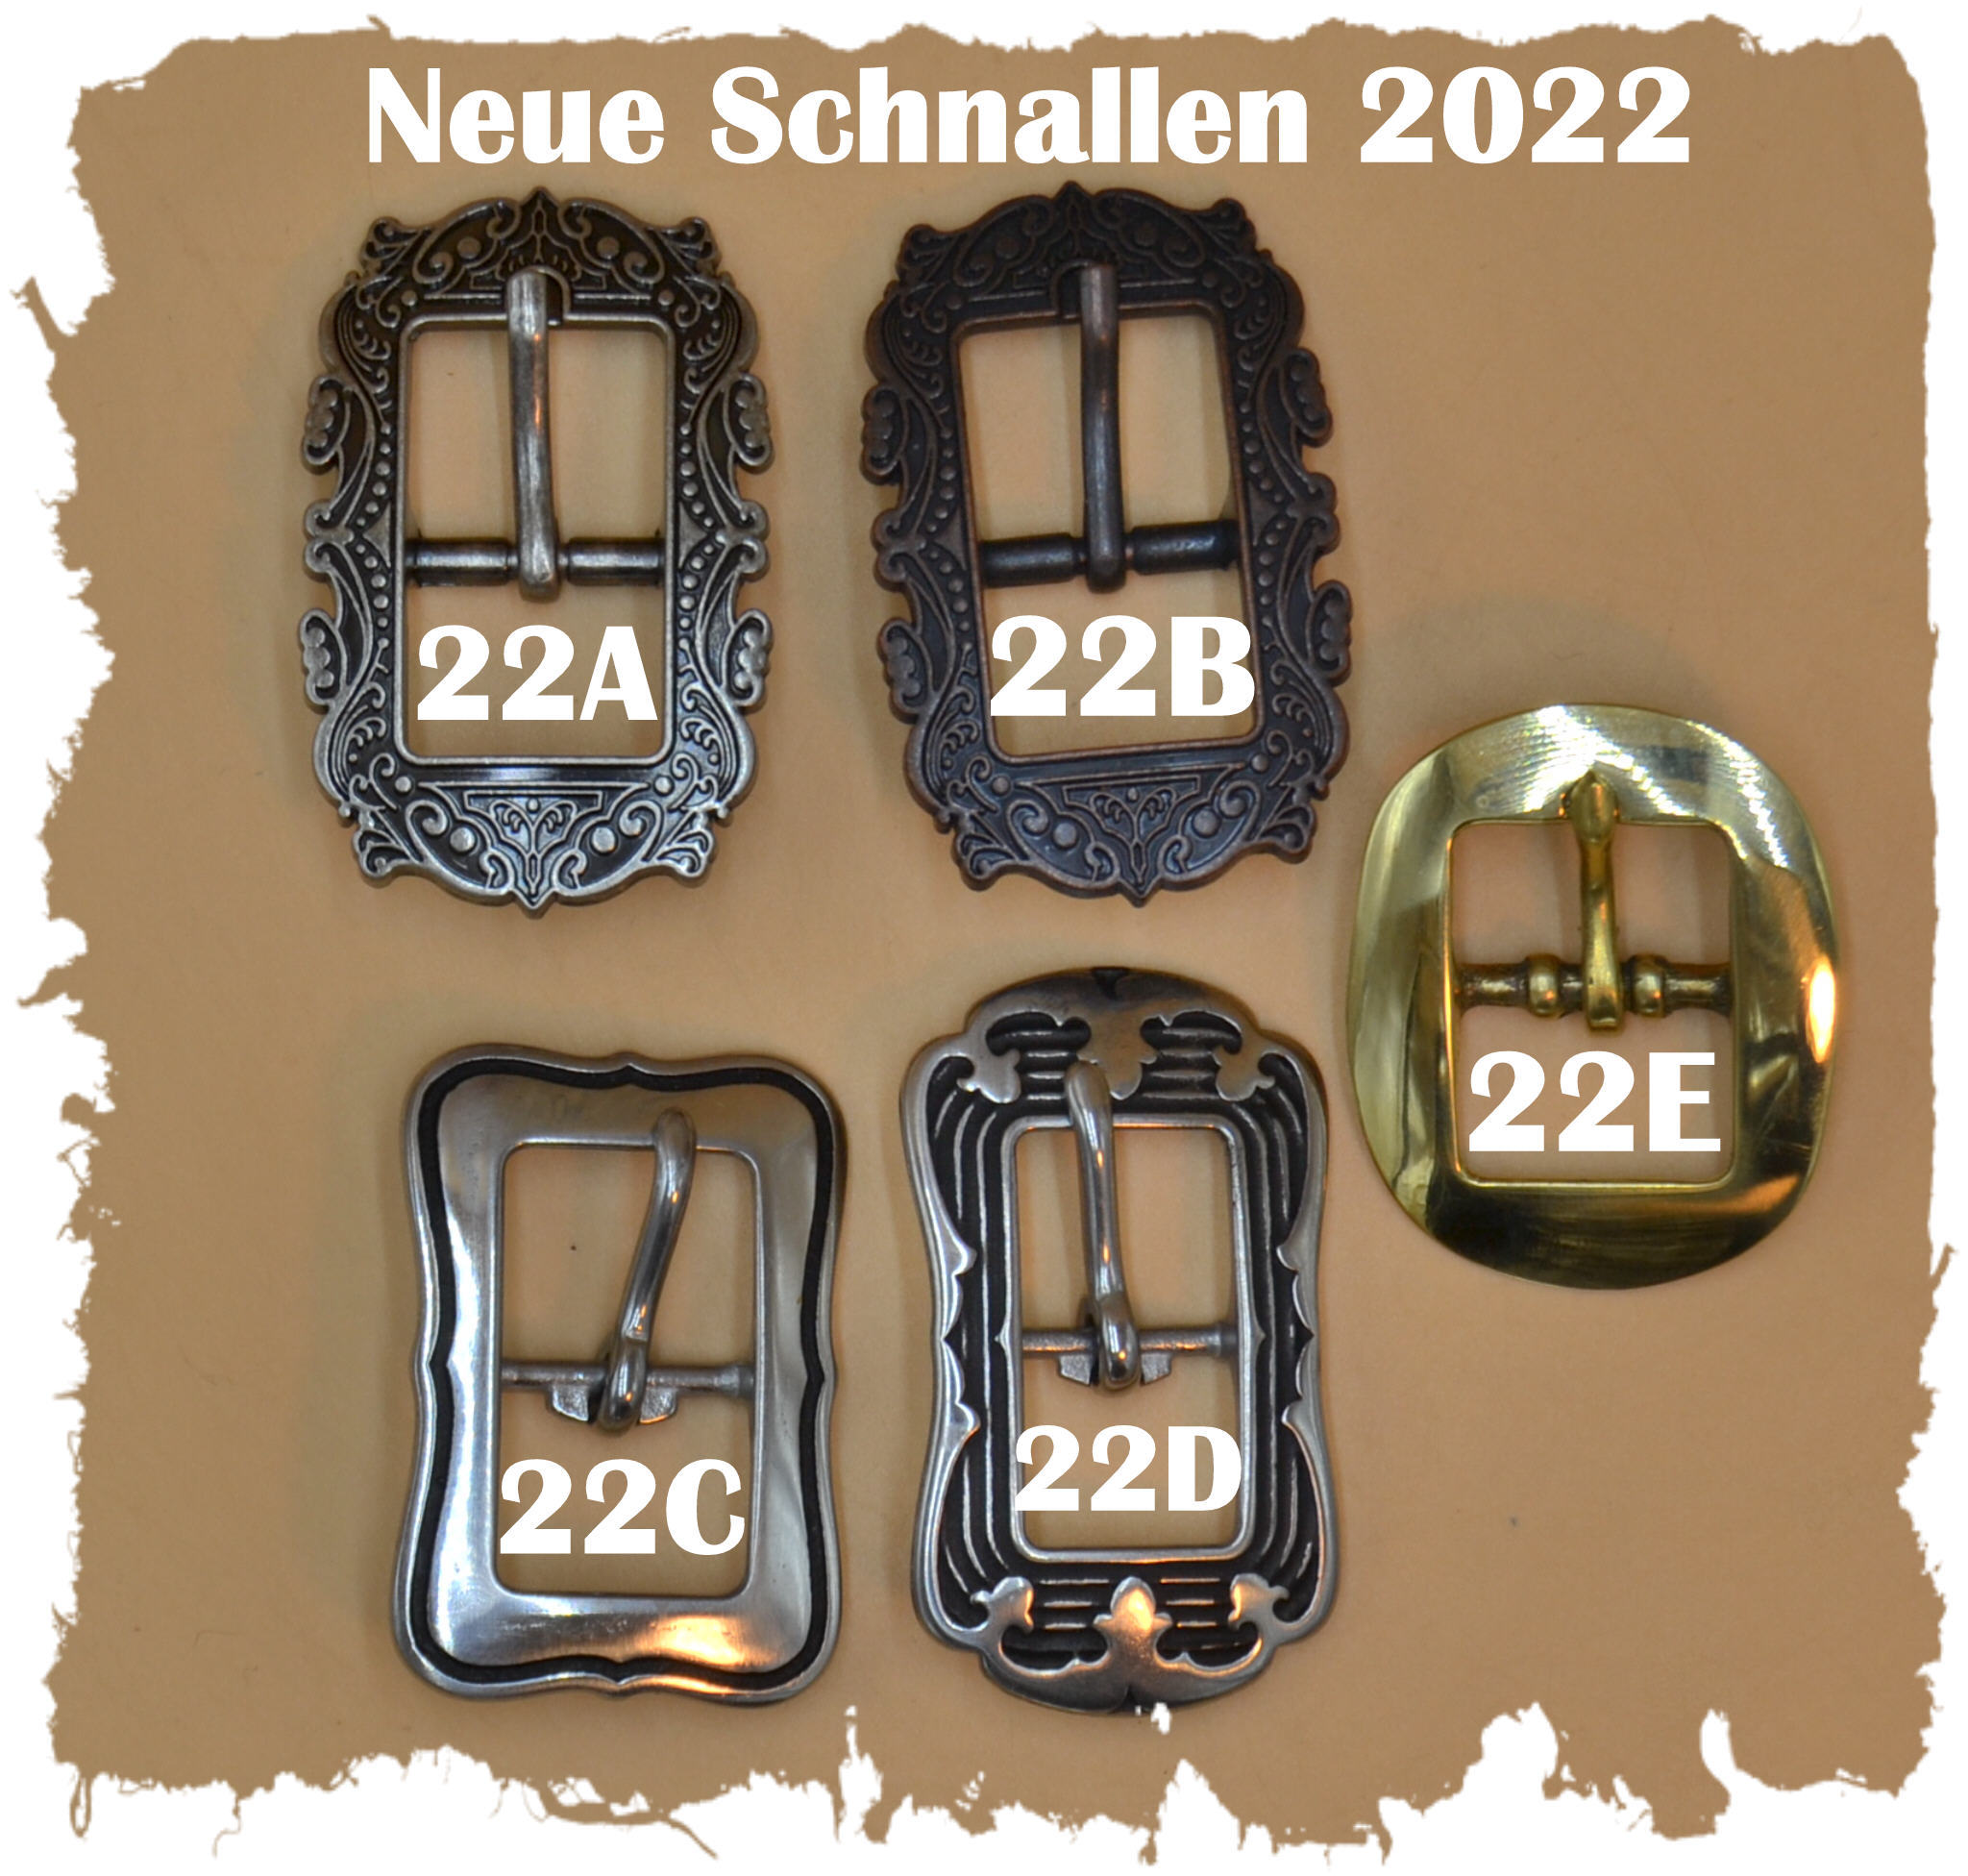 Schnallen2022